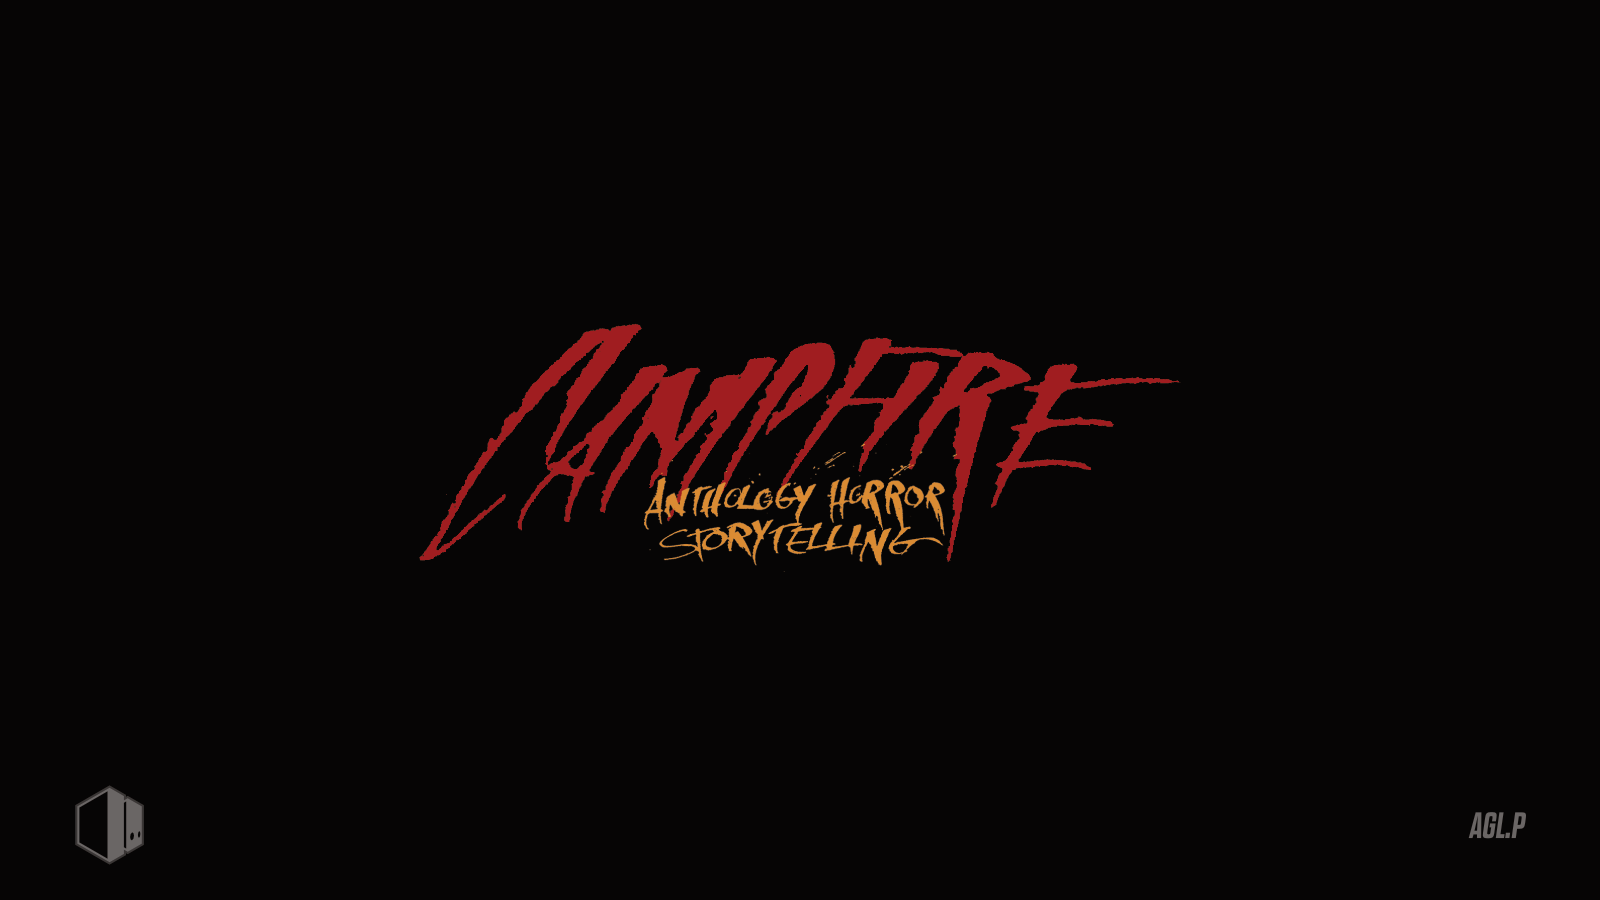 Campfire | World Champ Game Co. | Adam Vass